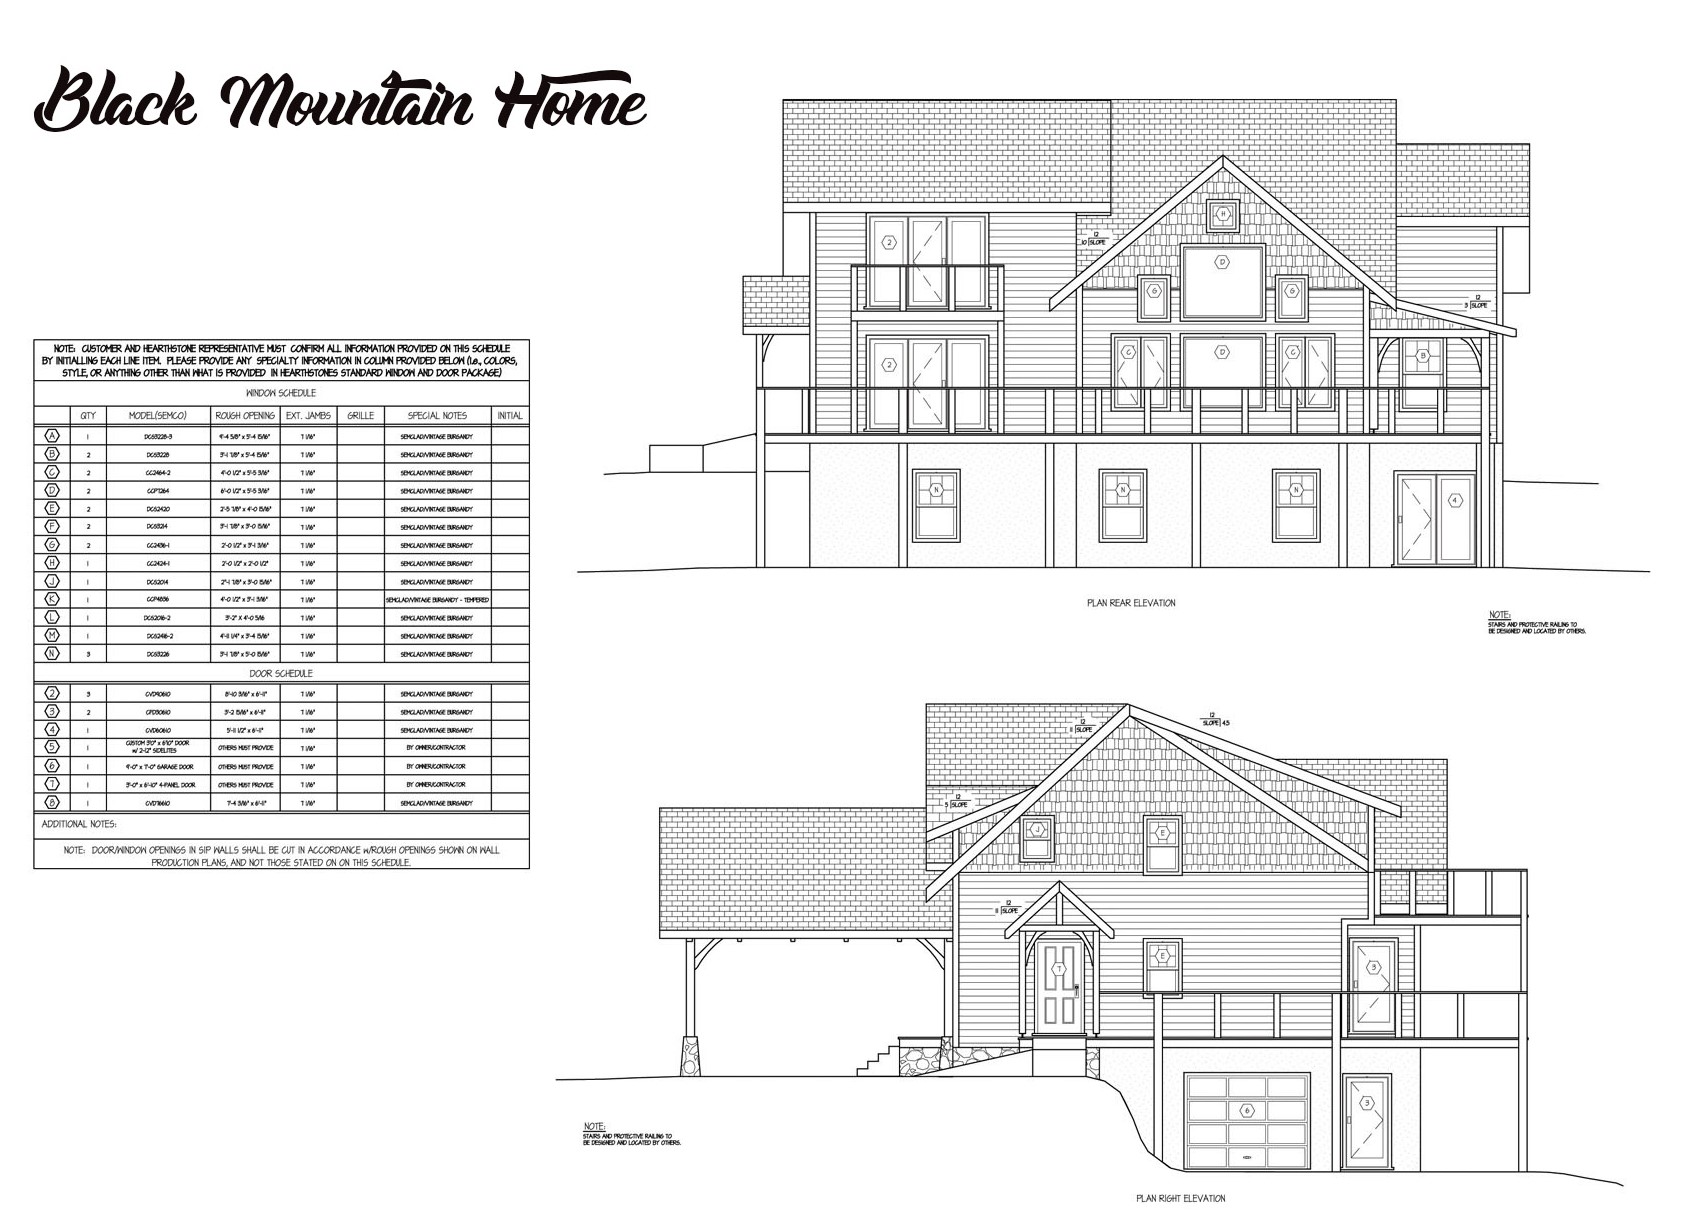 November 2018 Design of the Month "Black Mountain" plan4 0. edit Hearthstone Homes